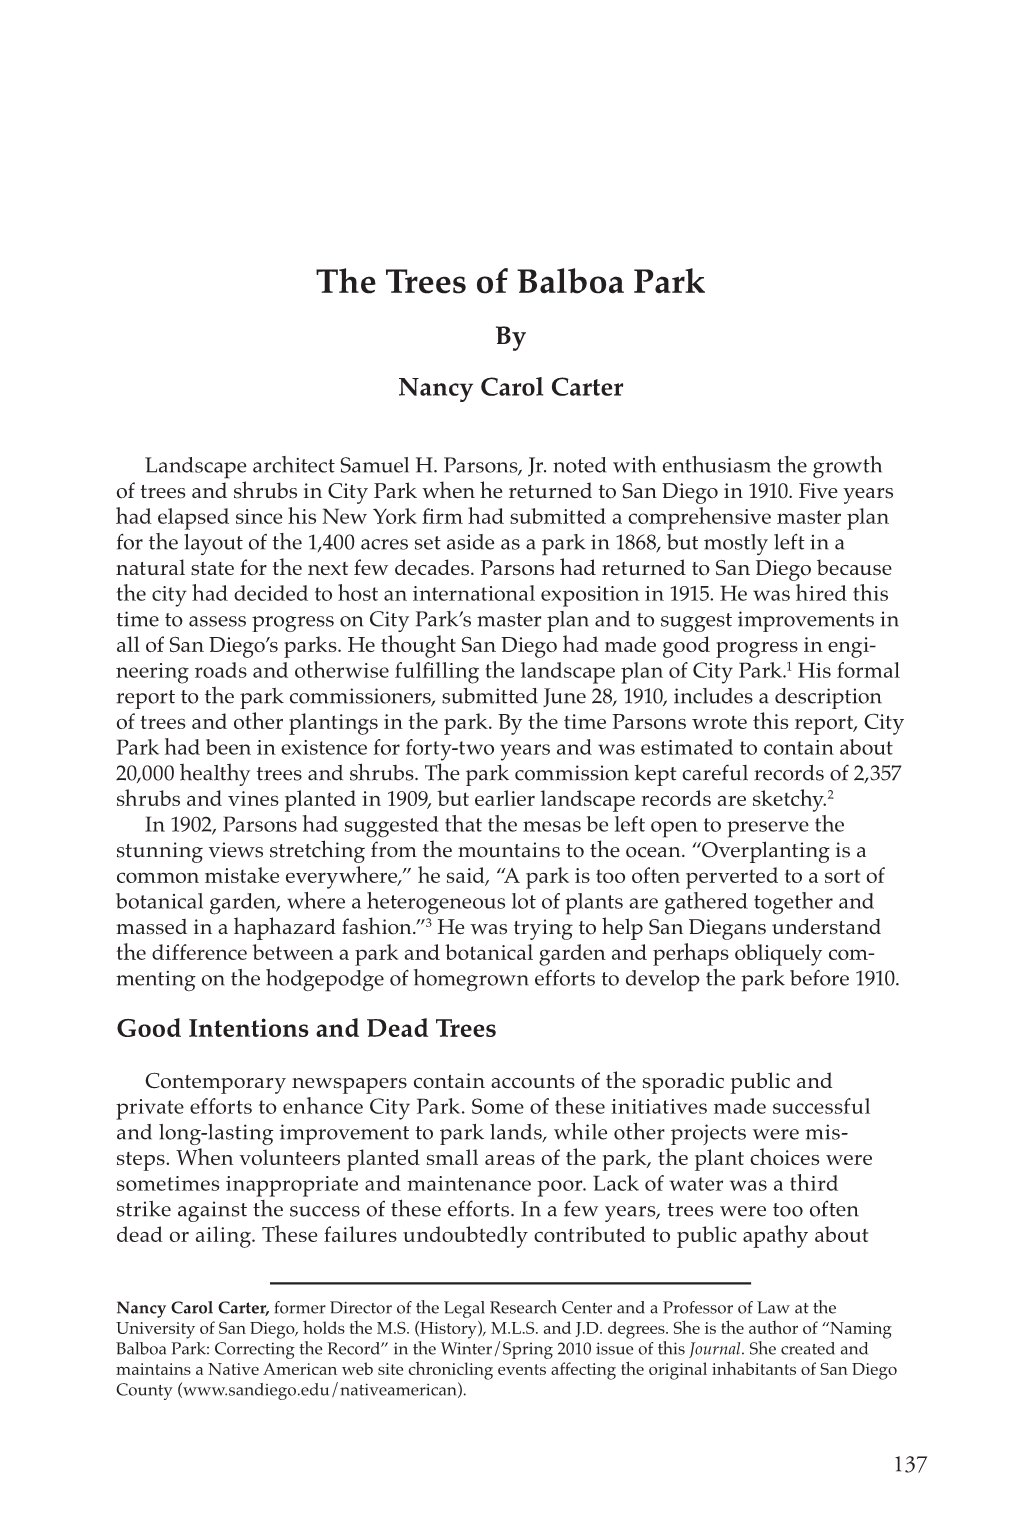 The Trees of Balboa Park by Nancy Carol Carter